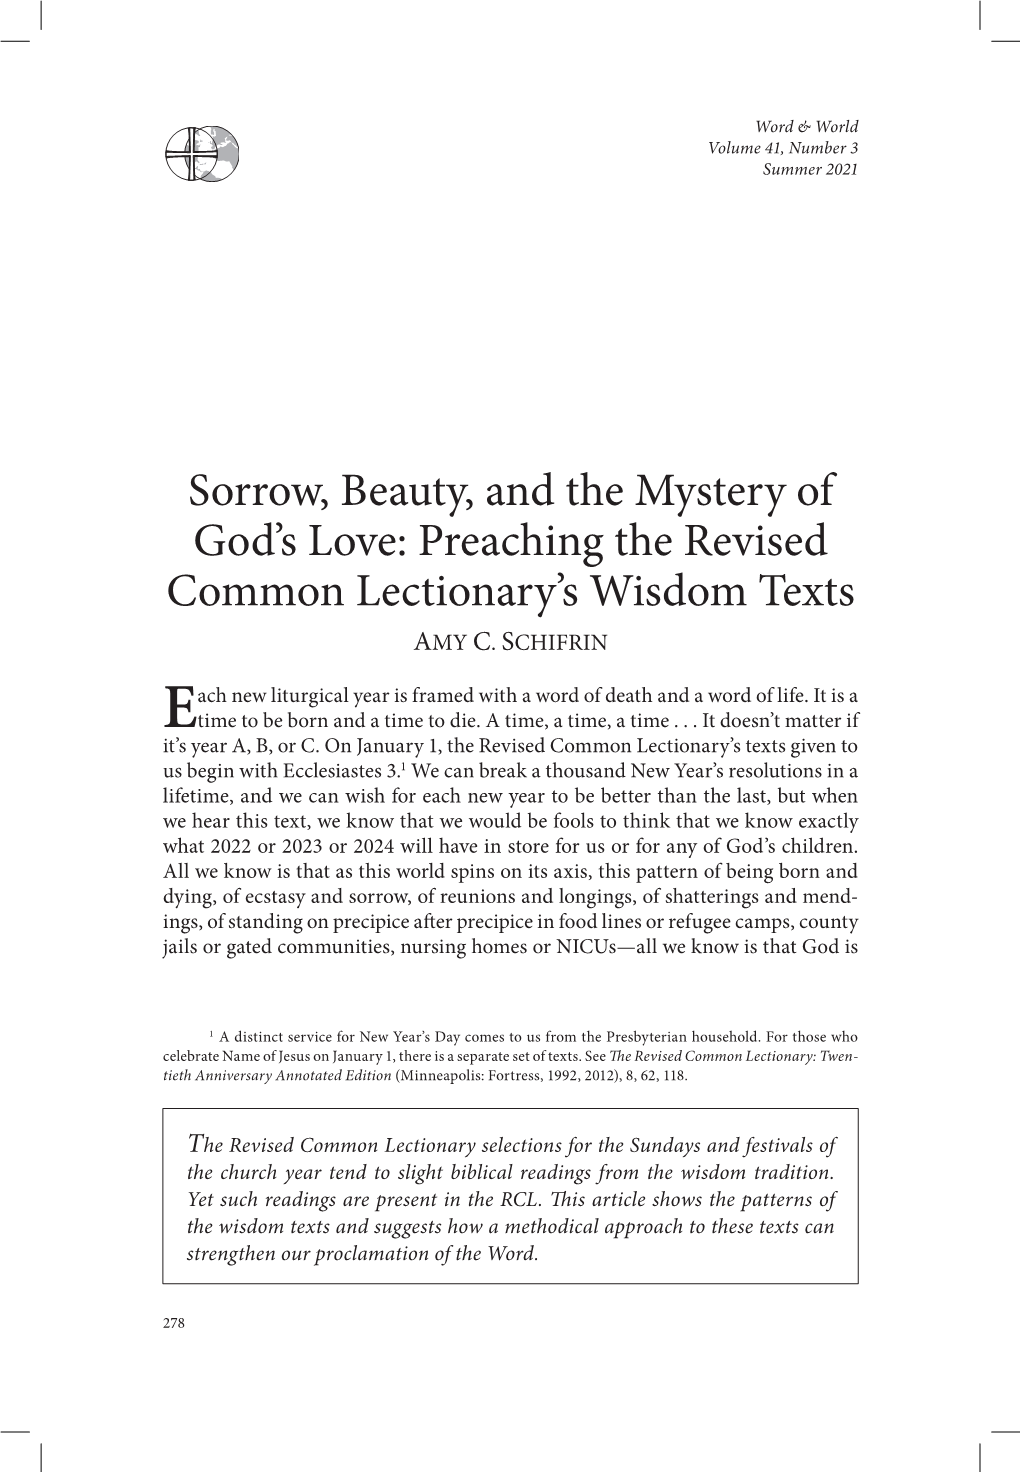 Sorrow, Beauty, and the Mystery of God's Love